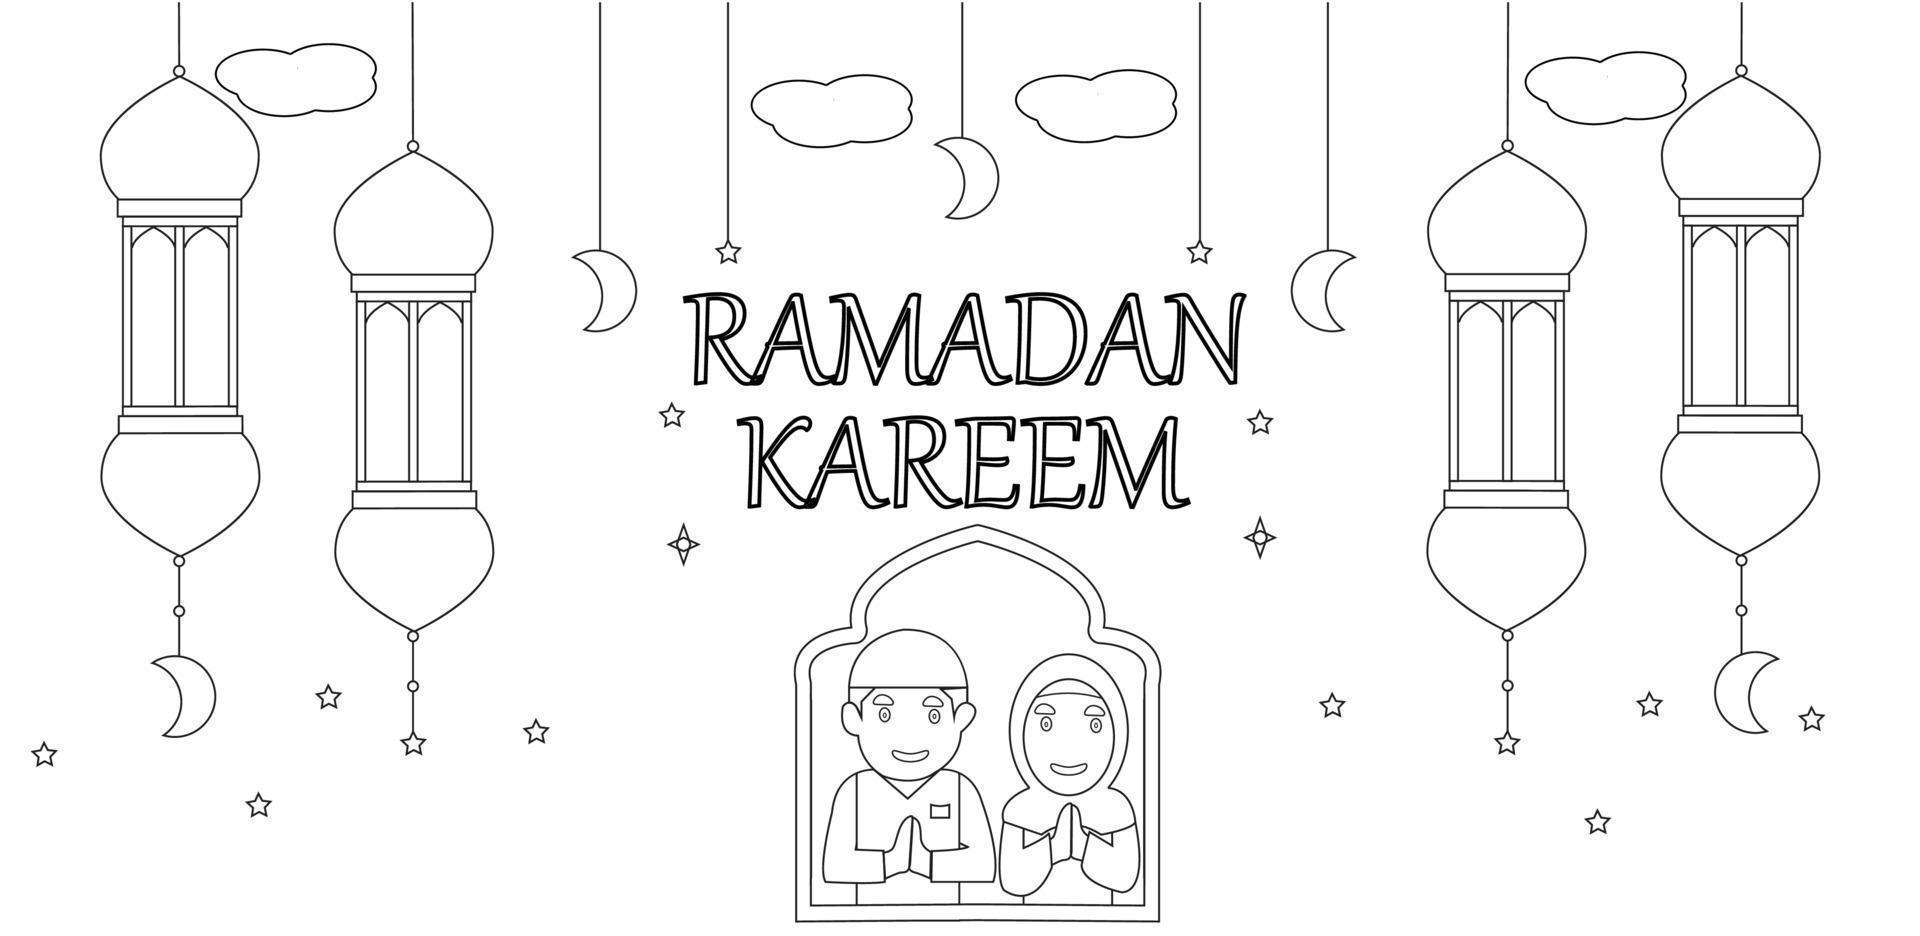 eid mubarak linea arte calligrafia elegante lettering Ramadan kareem testo Luna con moschea vettore